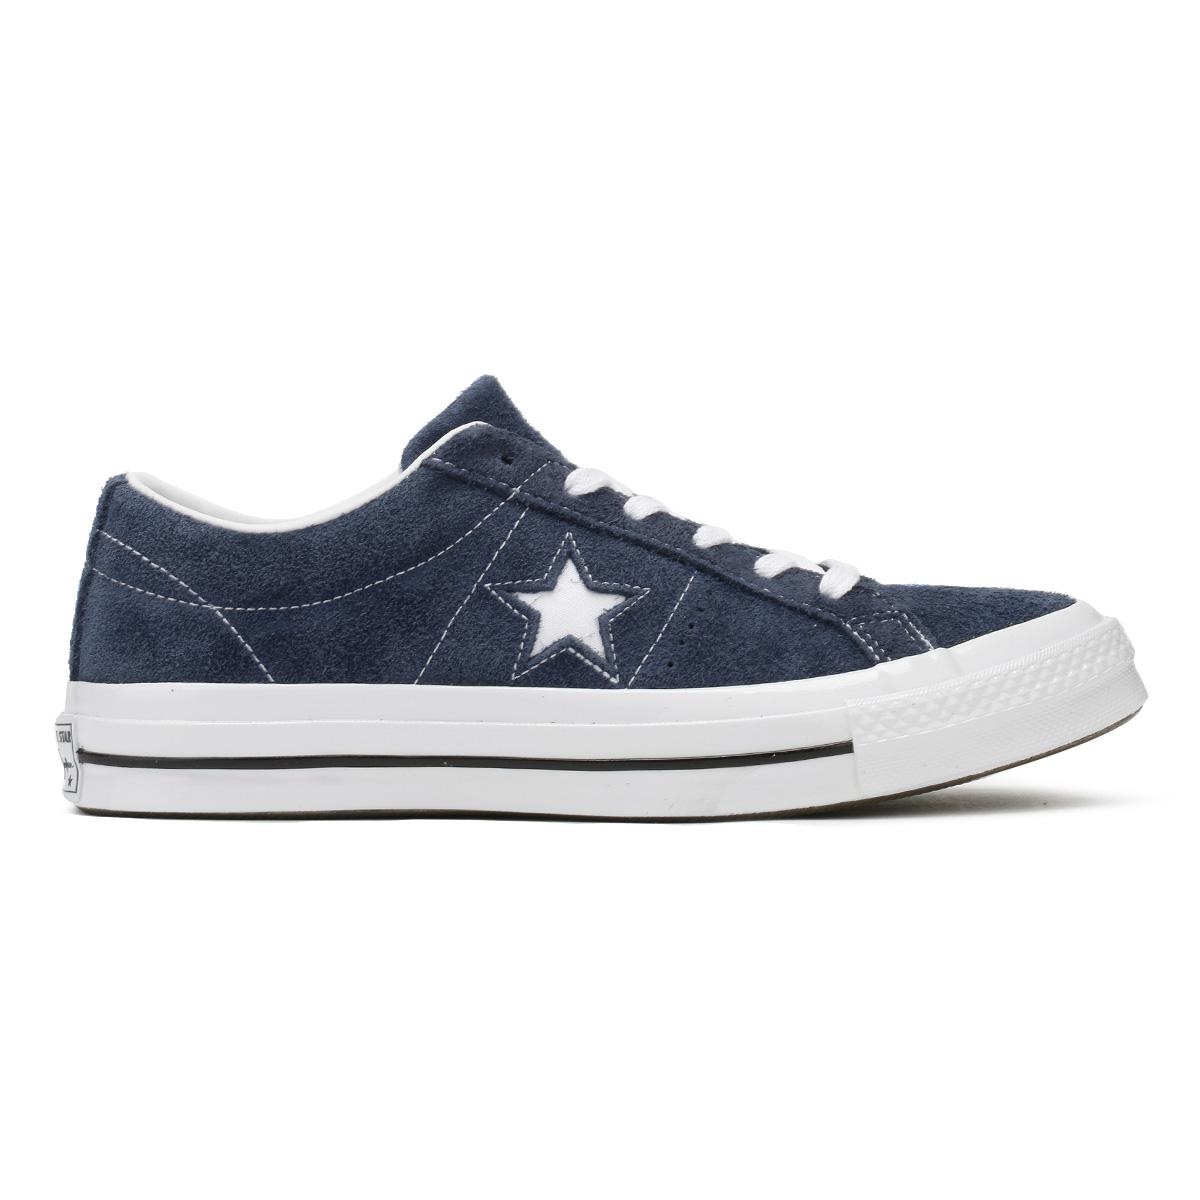 converse one star navy blue